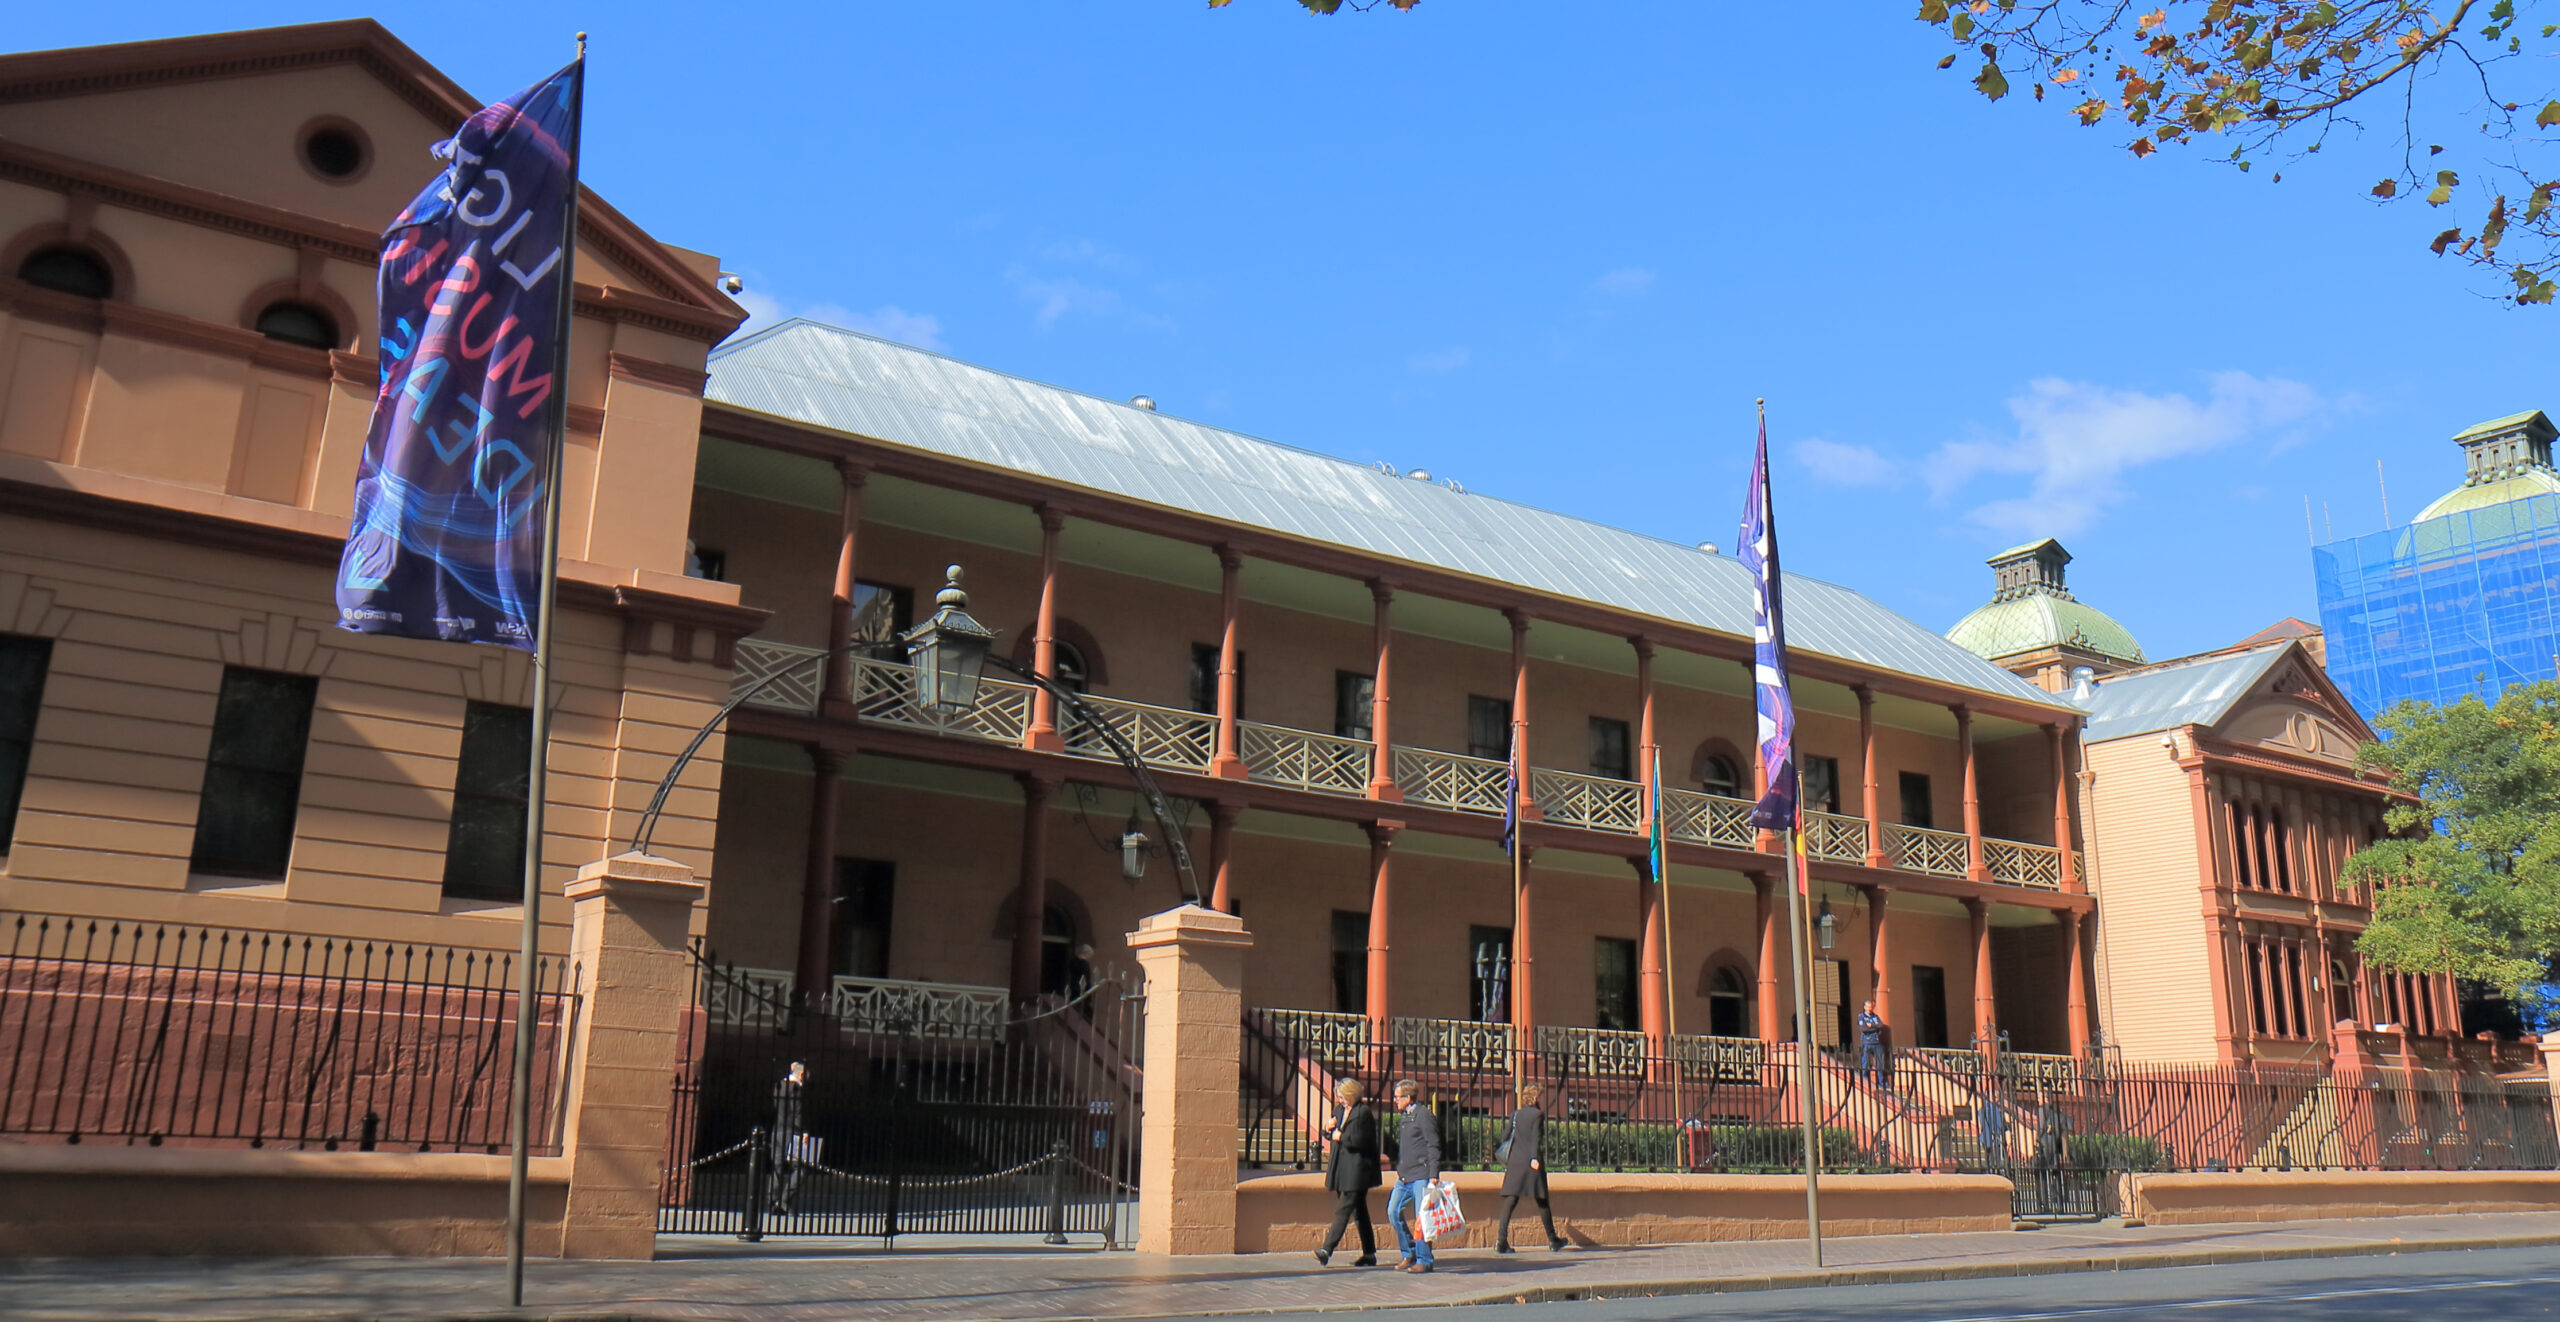 NSW Parliament Building